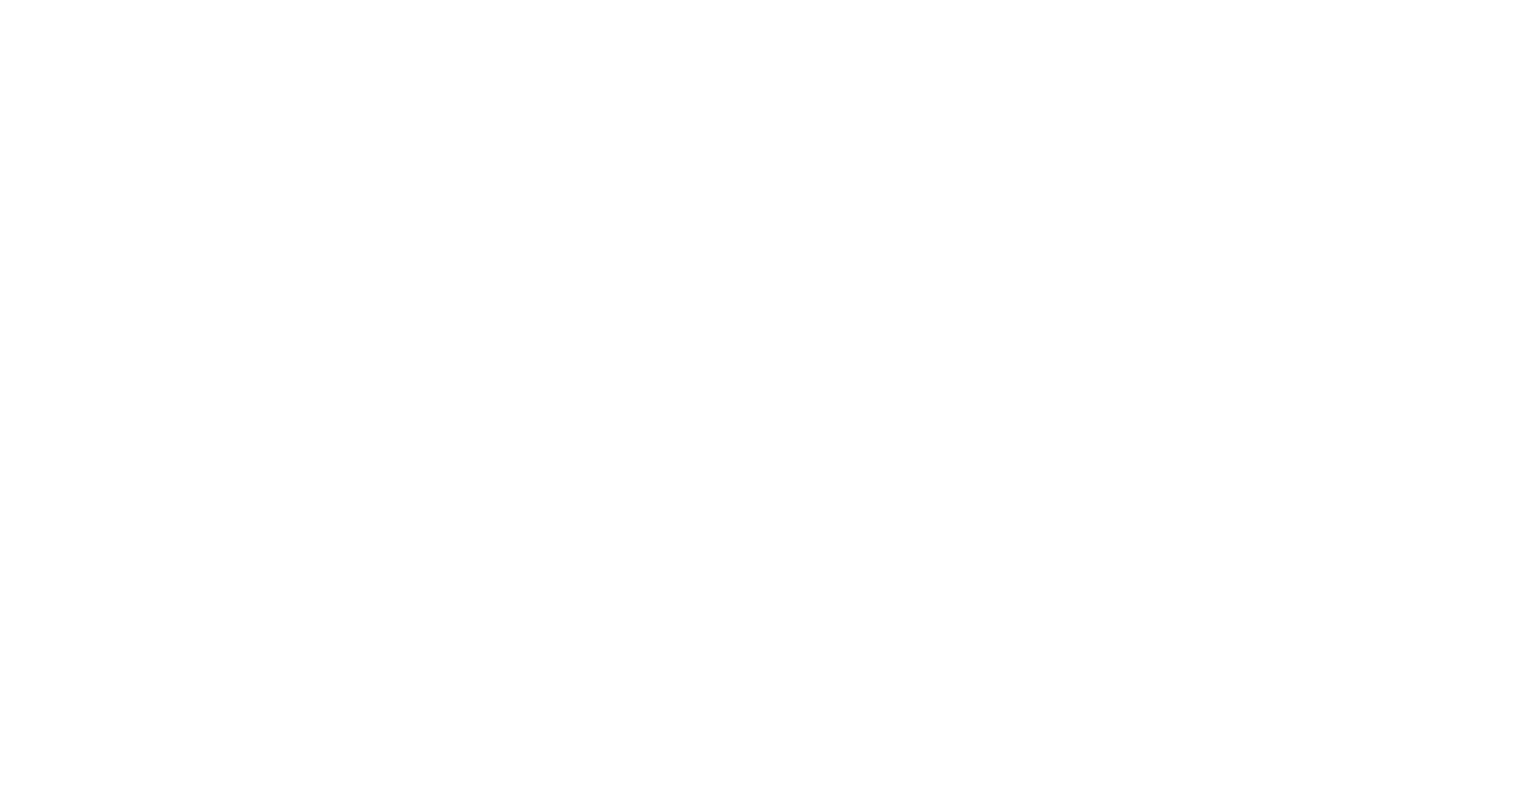 Palm Springs International Film Festival laurel